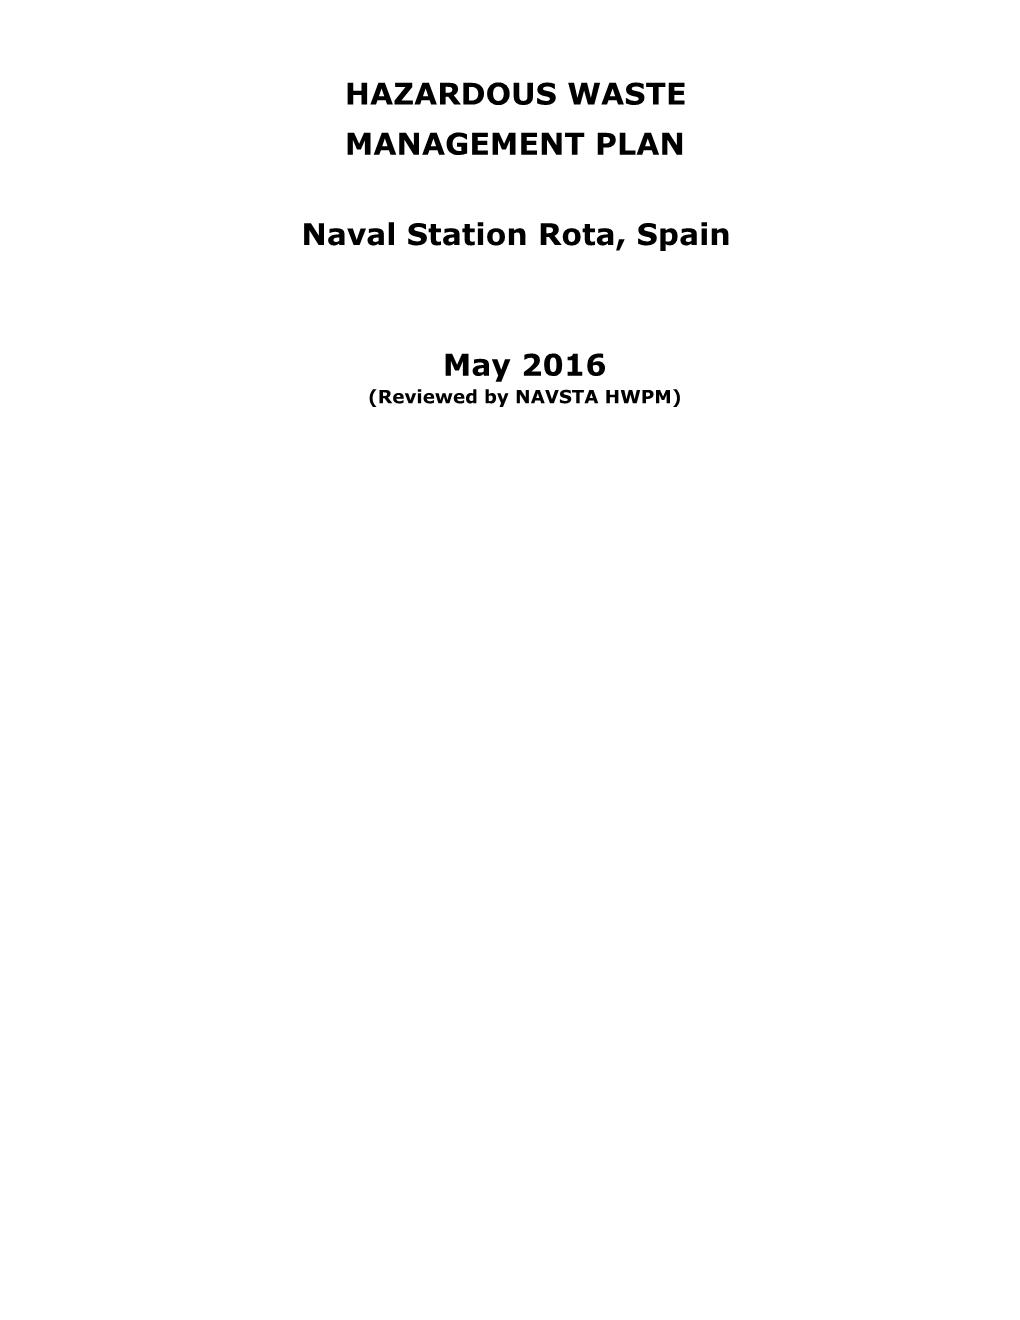 Hazardous Waste Management Plan Naval Station Rota, Spain